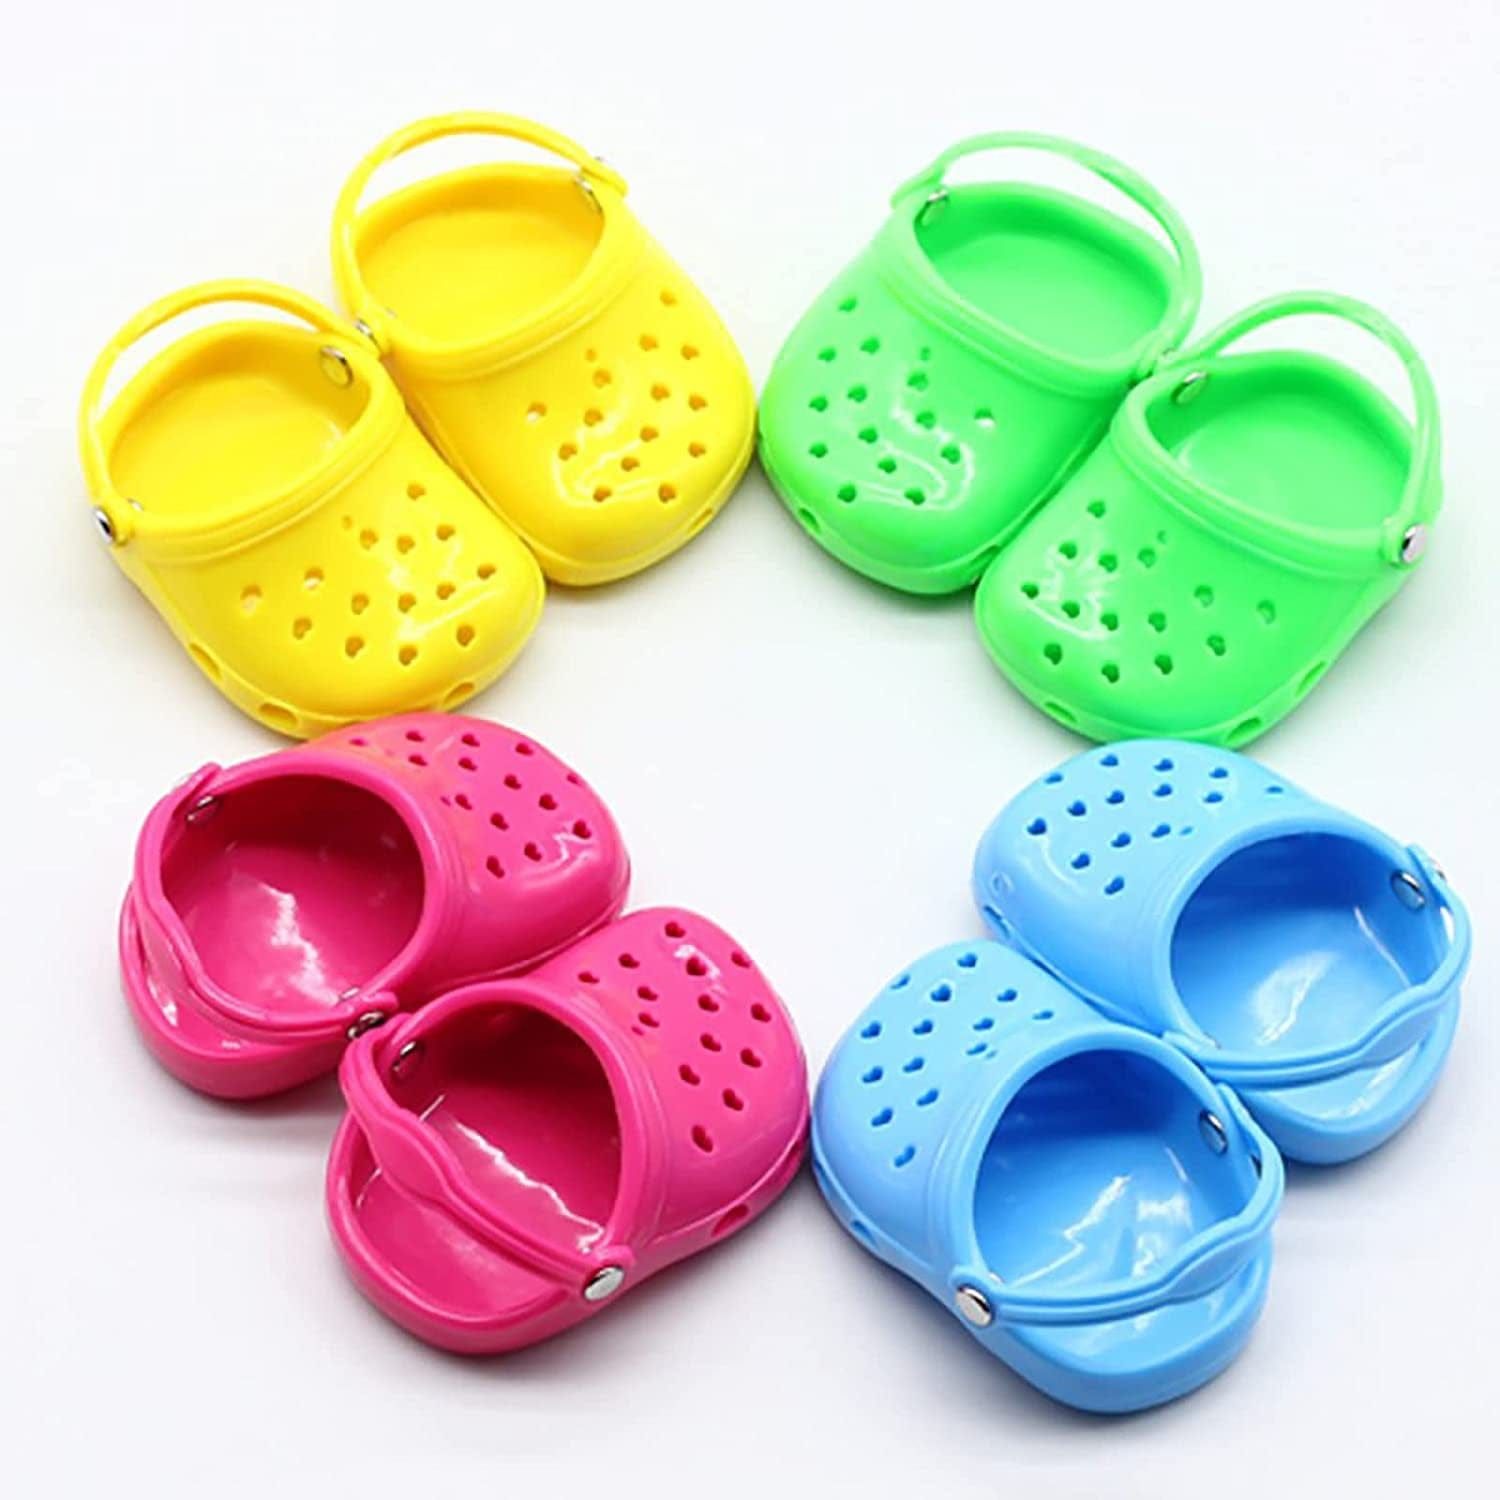  4 PCS Small Dog Crocs, Shoes, Candy Colors Sandals